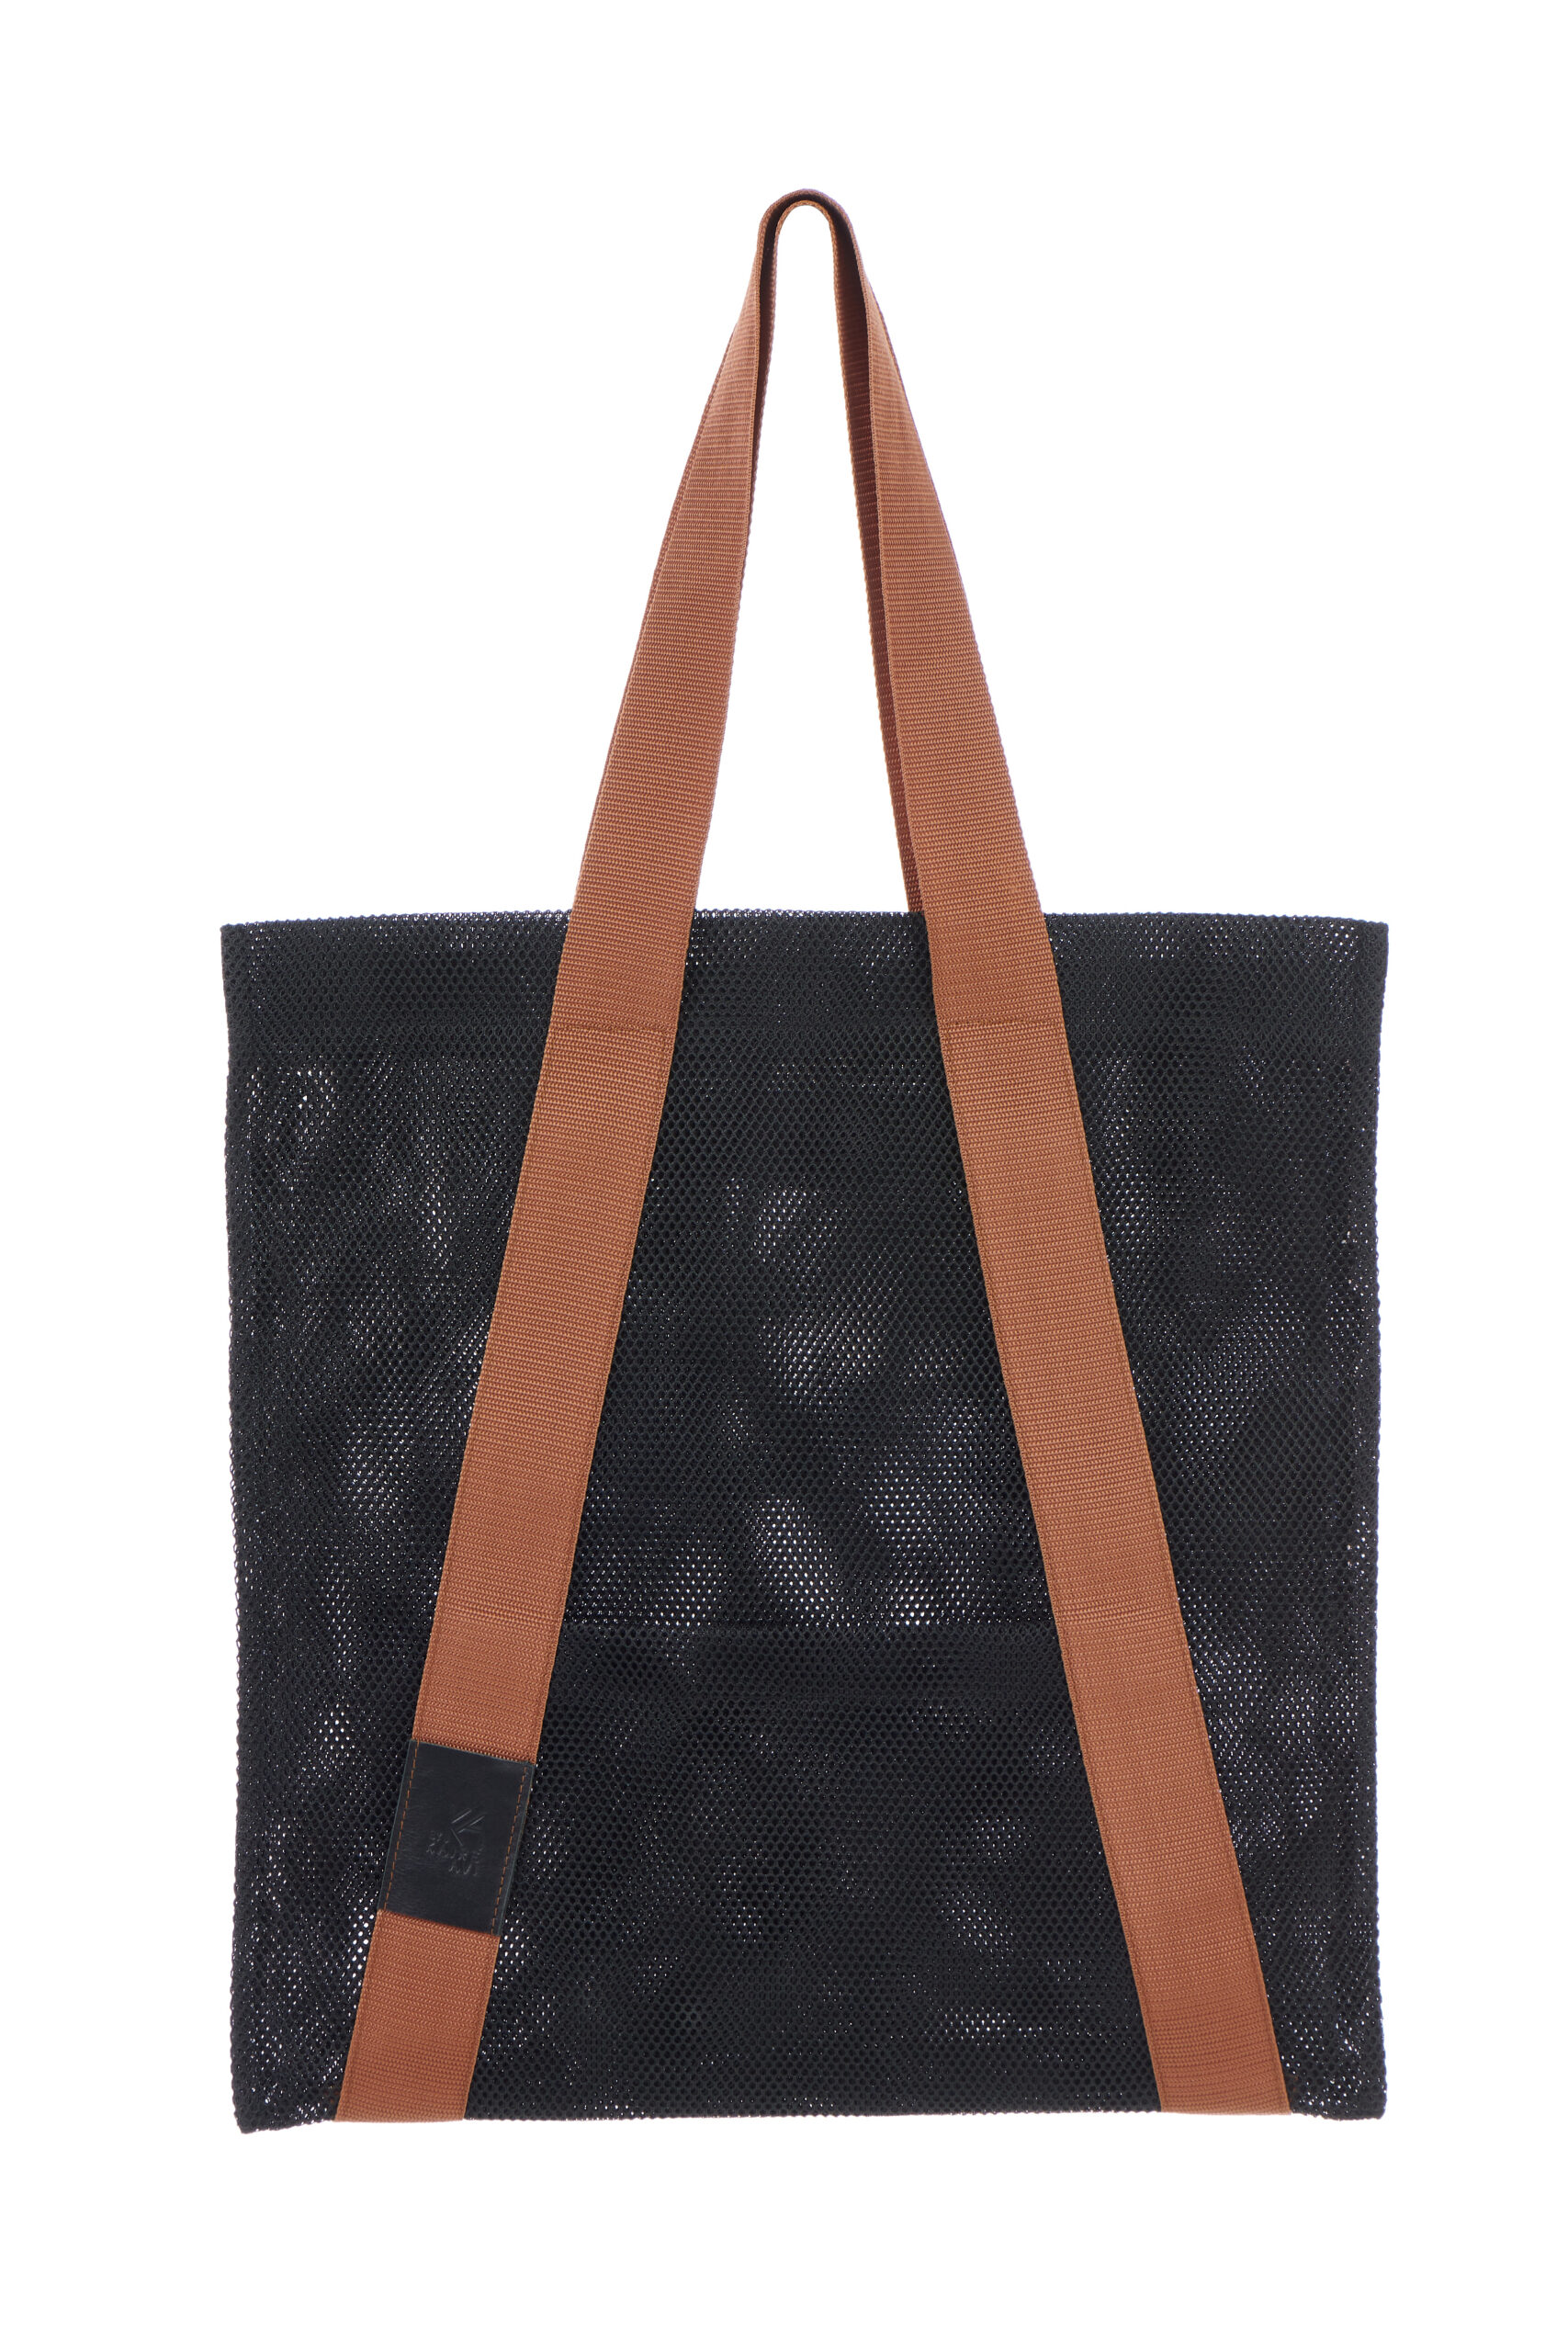 Poekott “Hanna” pruun rihm / Tote bag “Hanna” black, brown straps